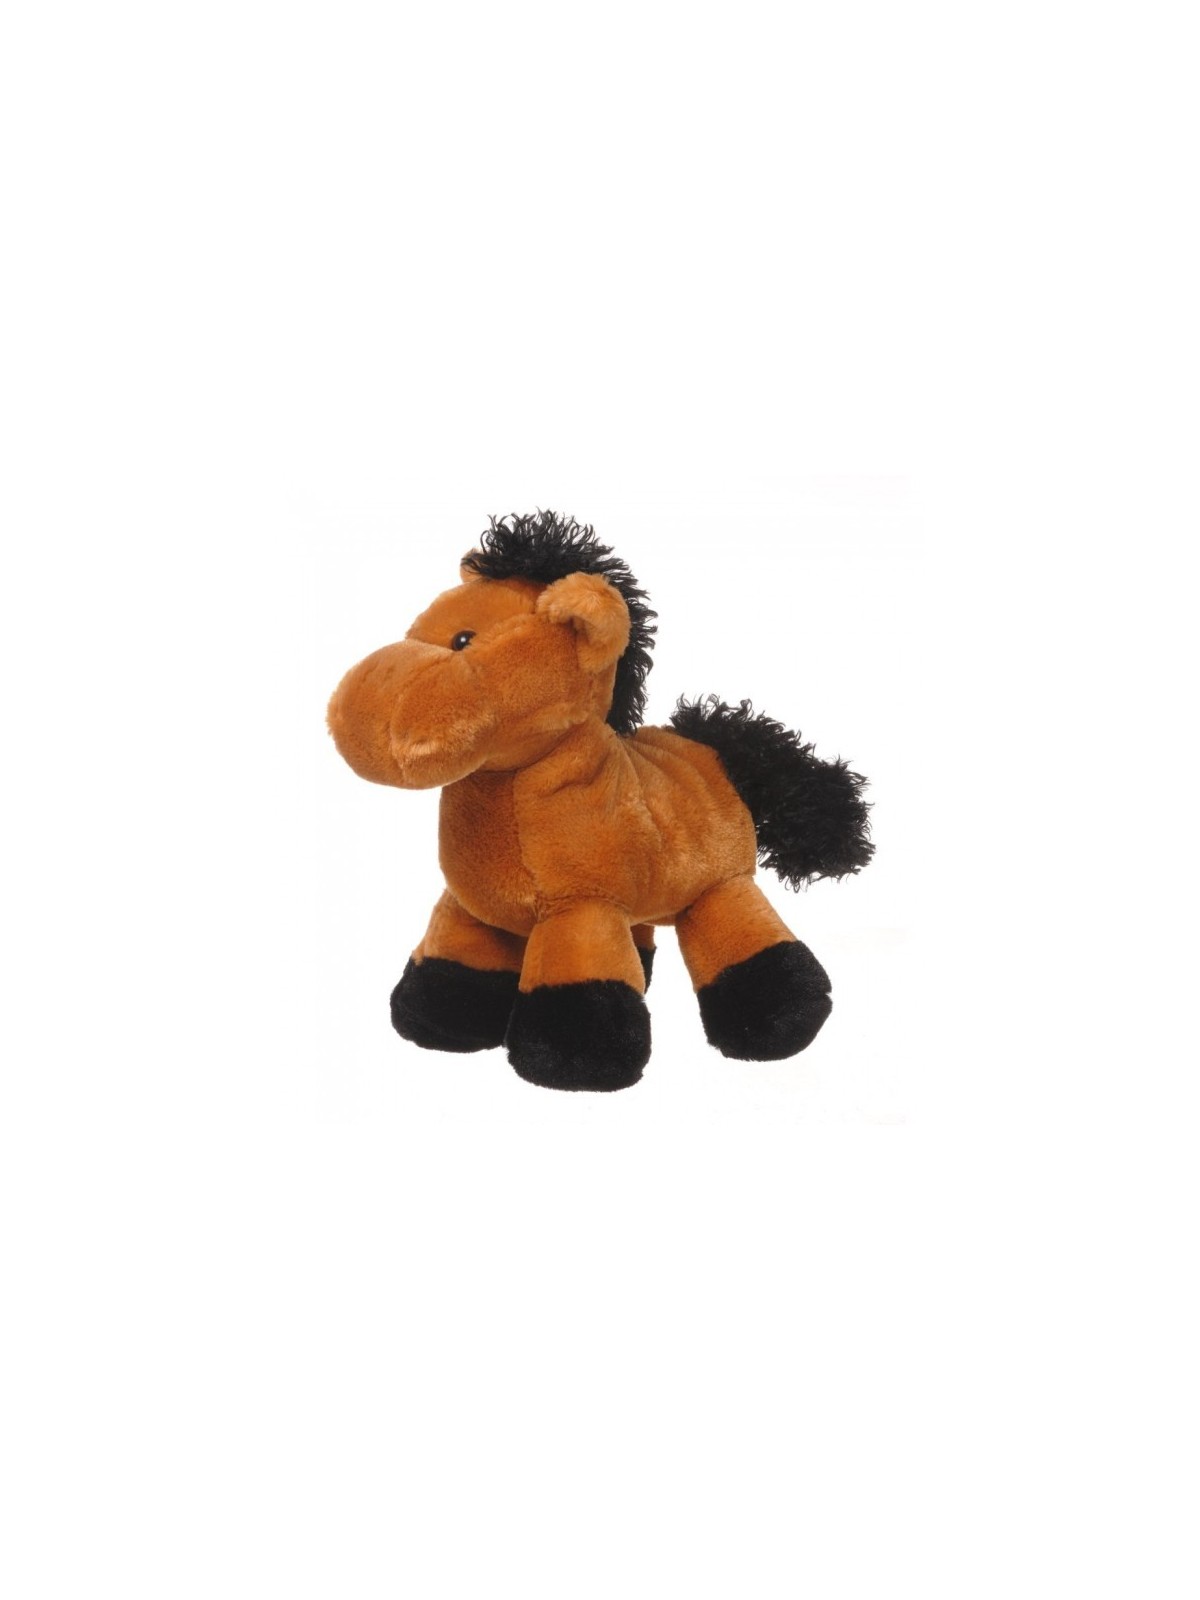 Plush Horse brown with black mane